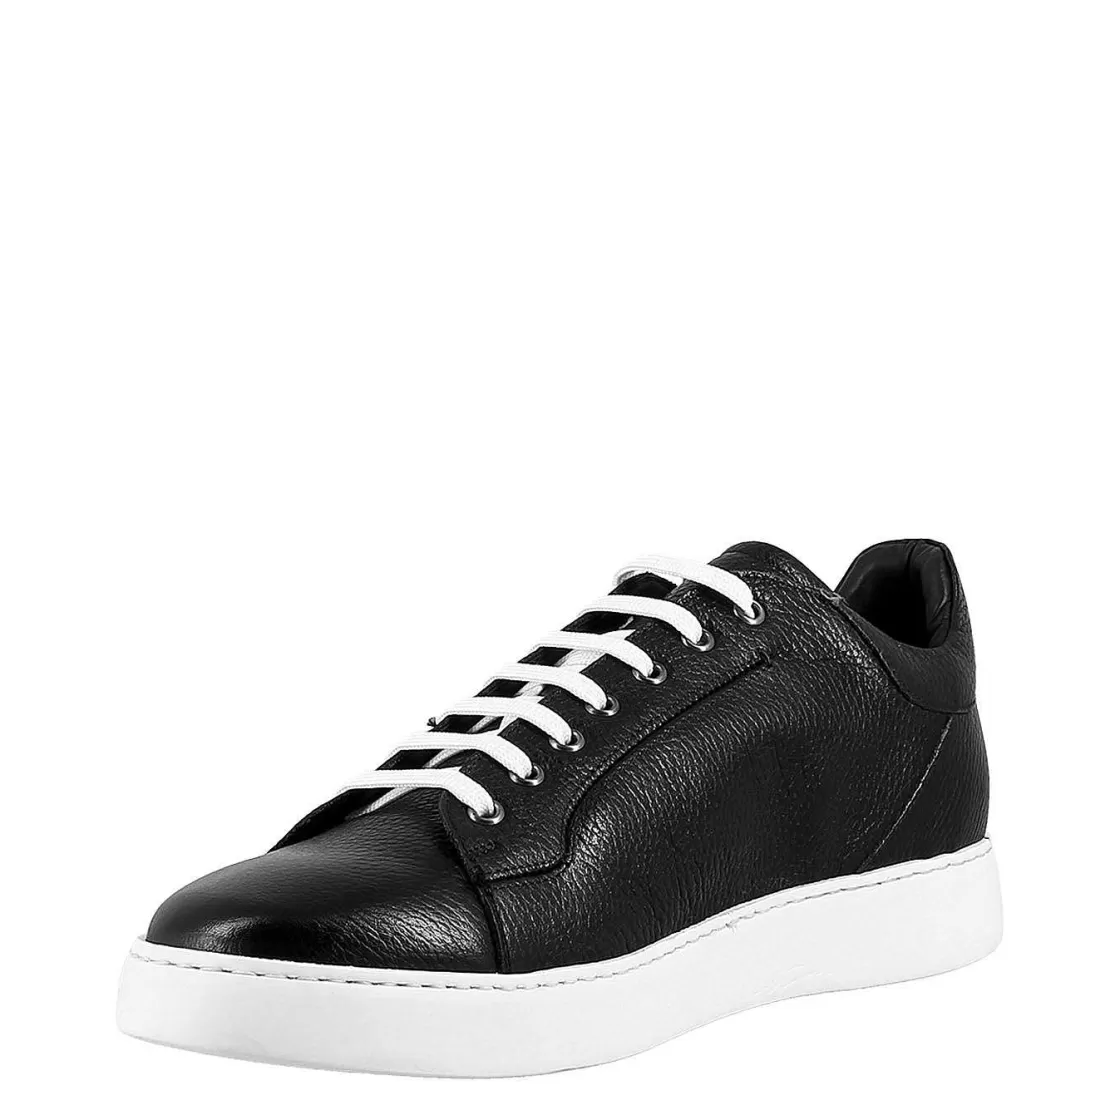 Leonardo Elegant Black Sneaker For Men In Smooth Leather Flash Sale